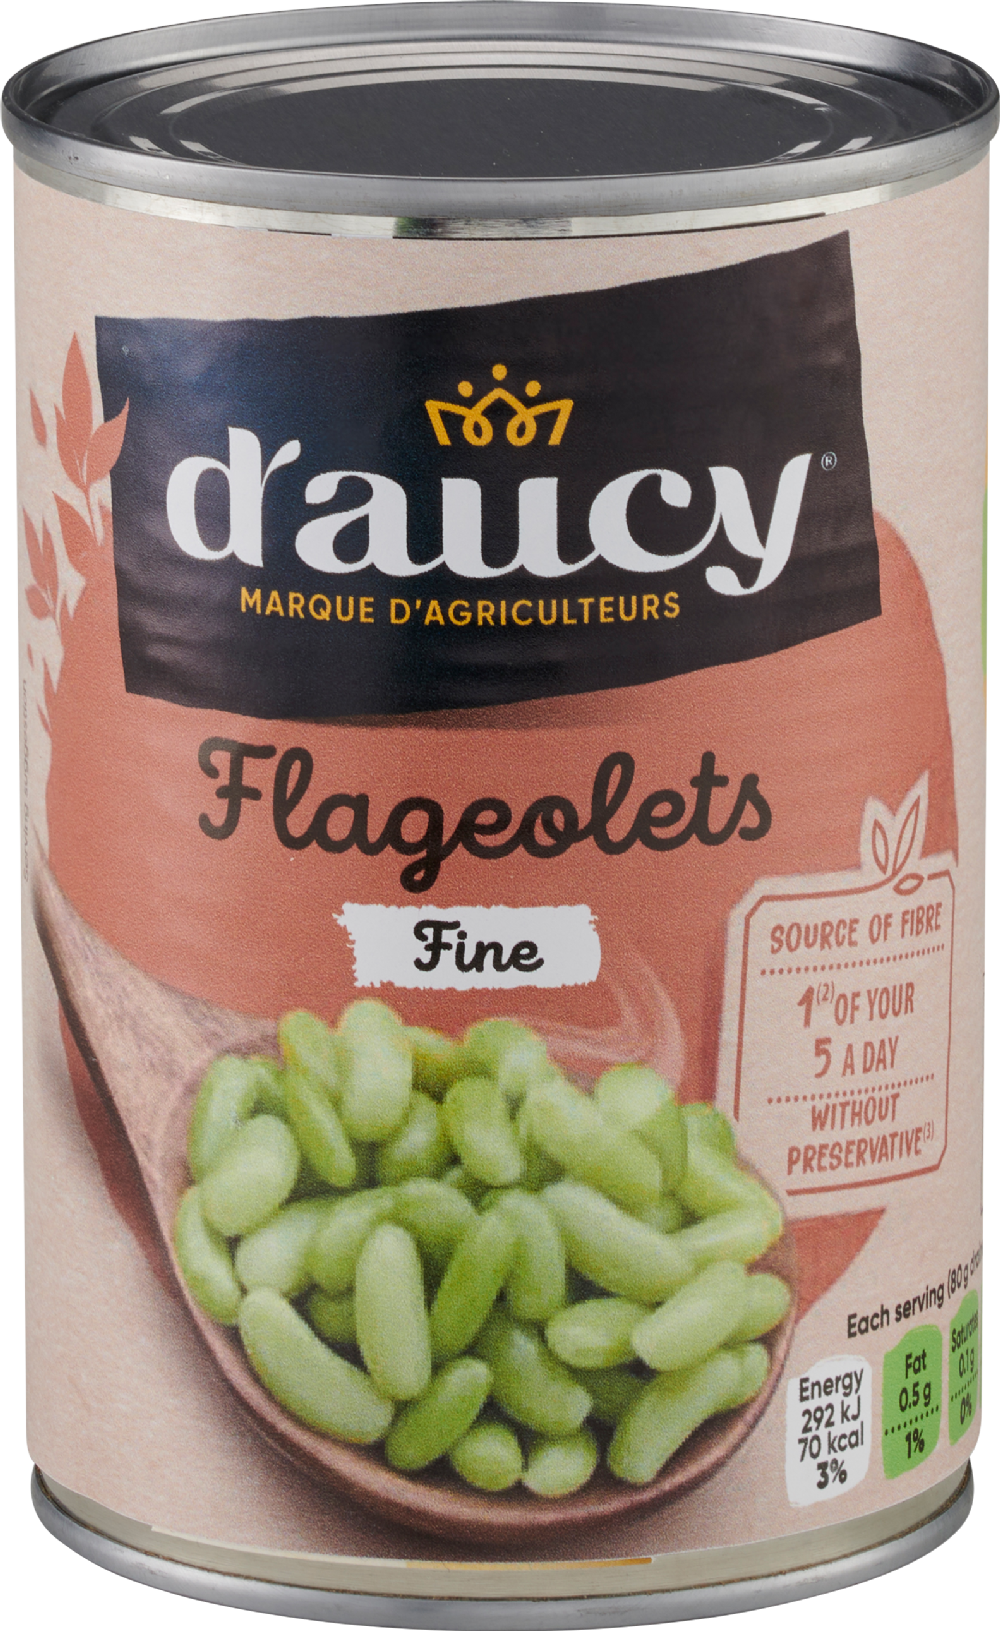 D'AUCY Flageolets - Fine 400g